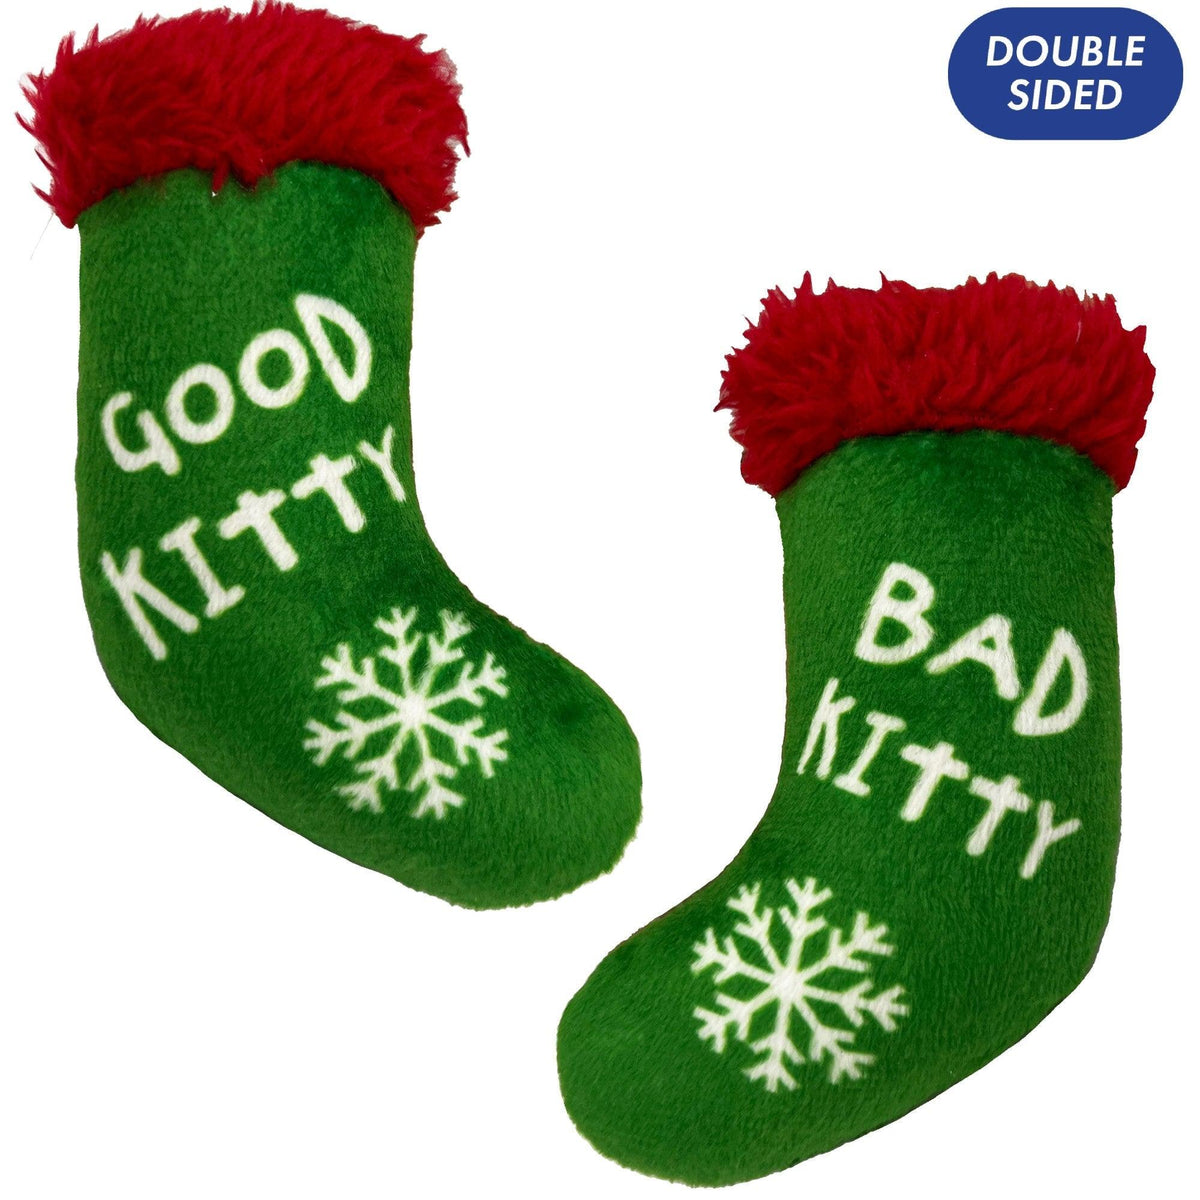 Good/Bad Kitty Stocking Cat Toy